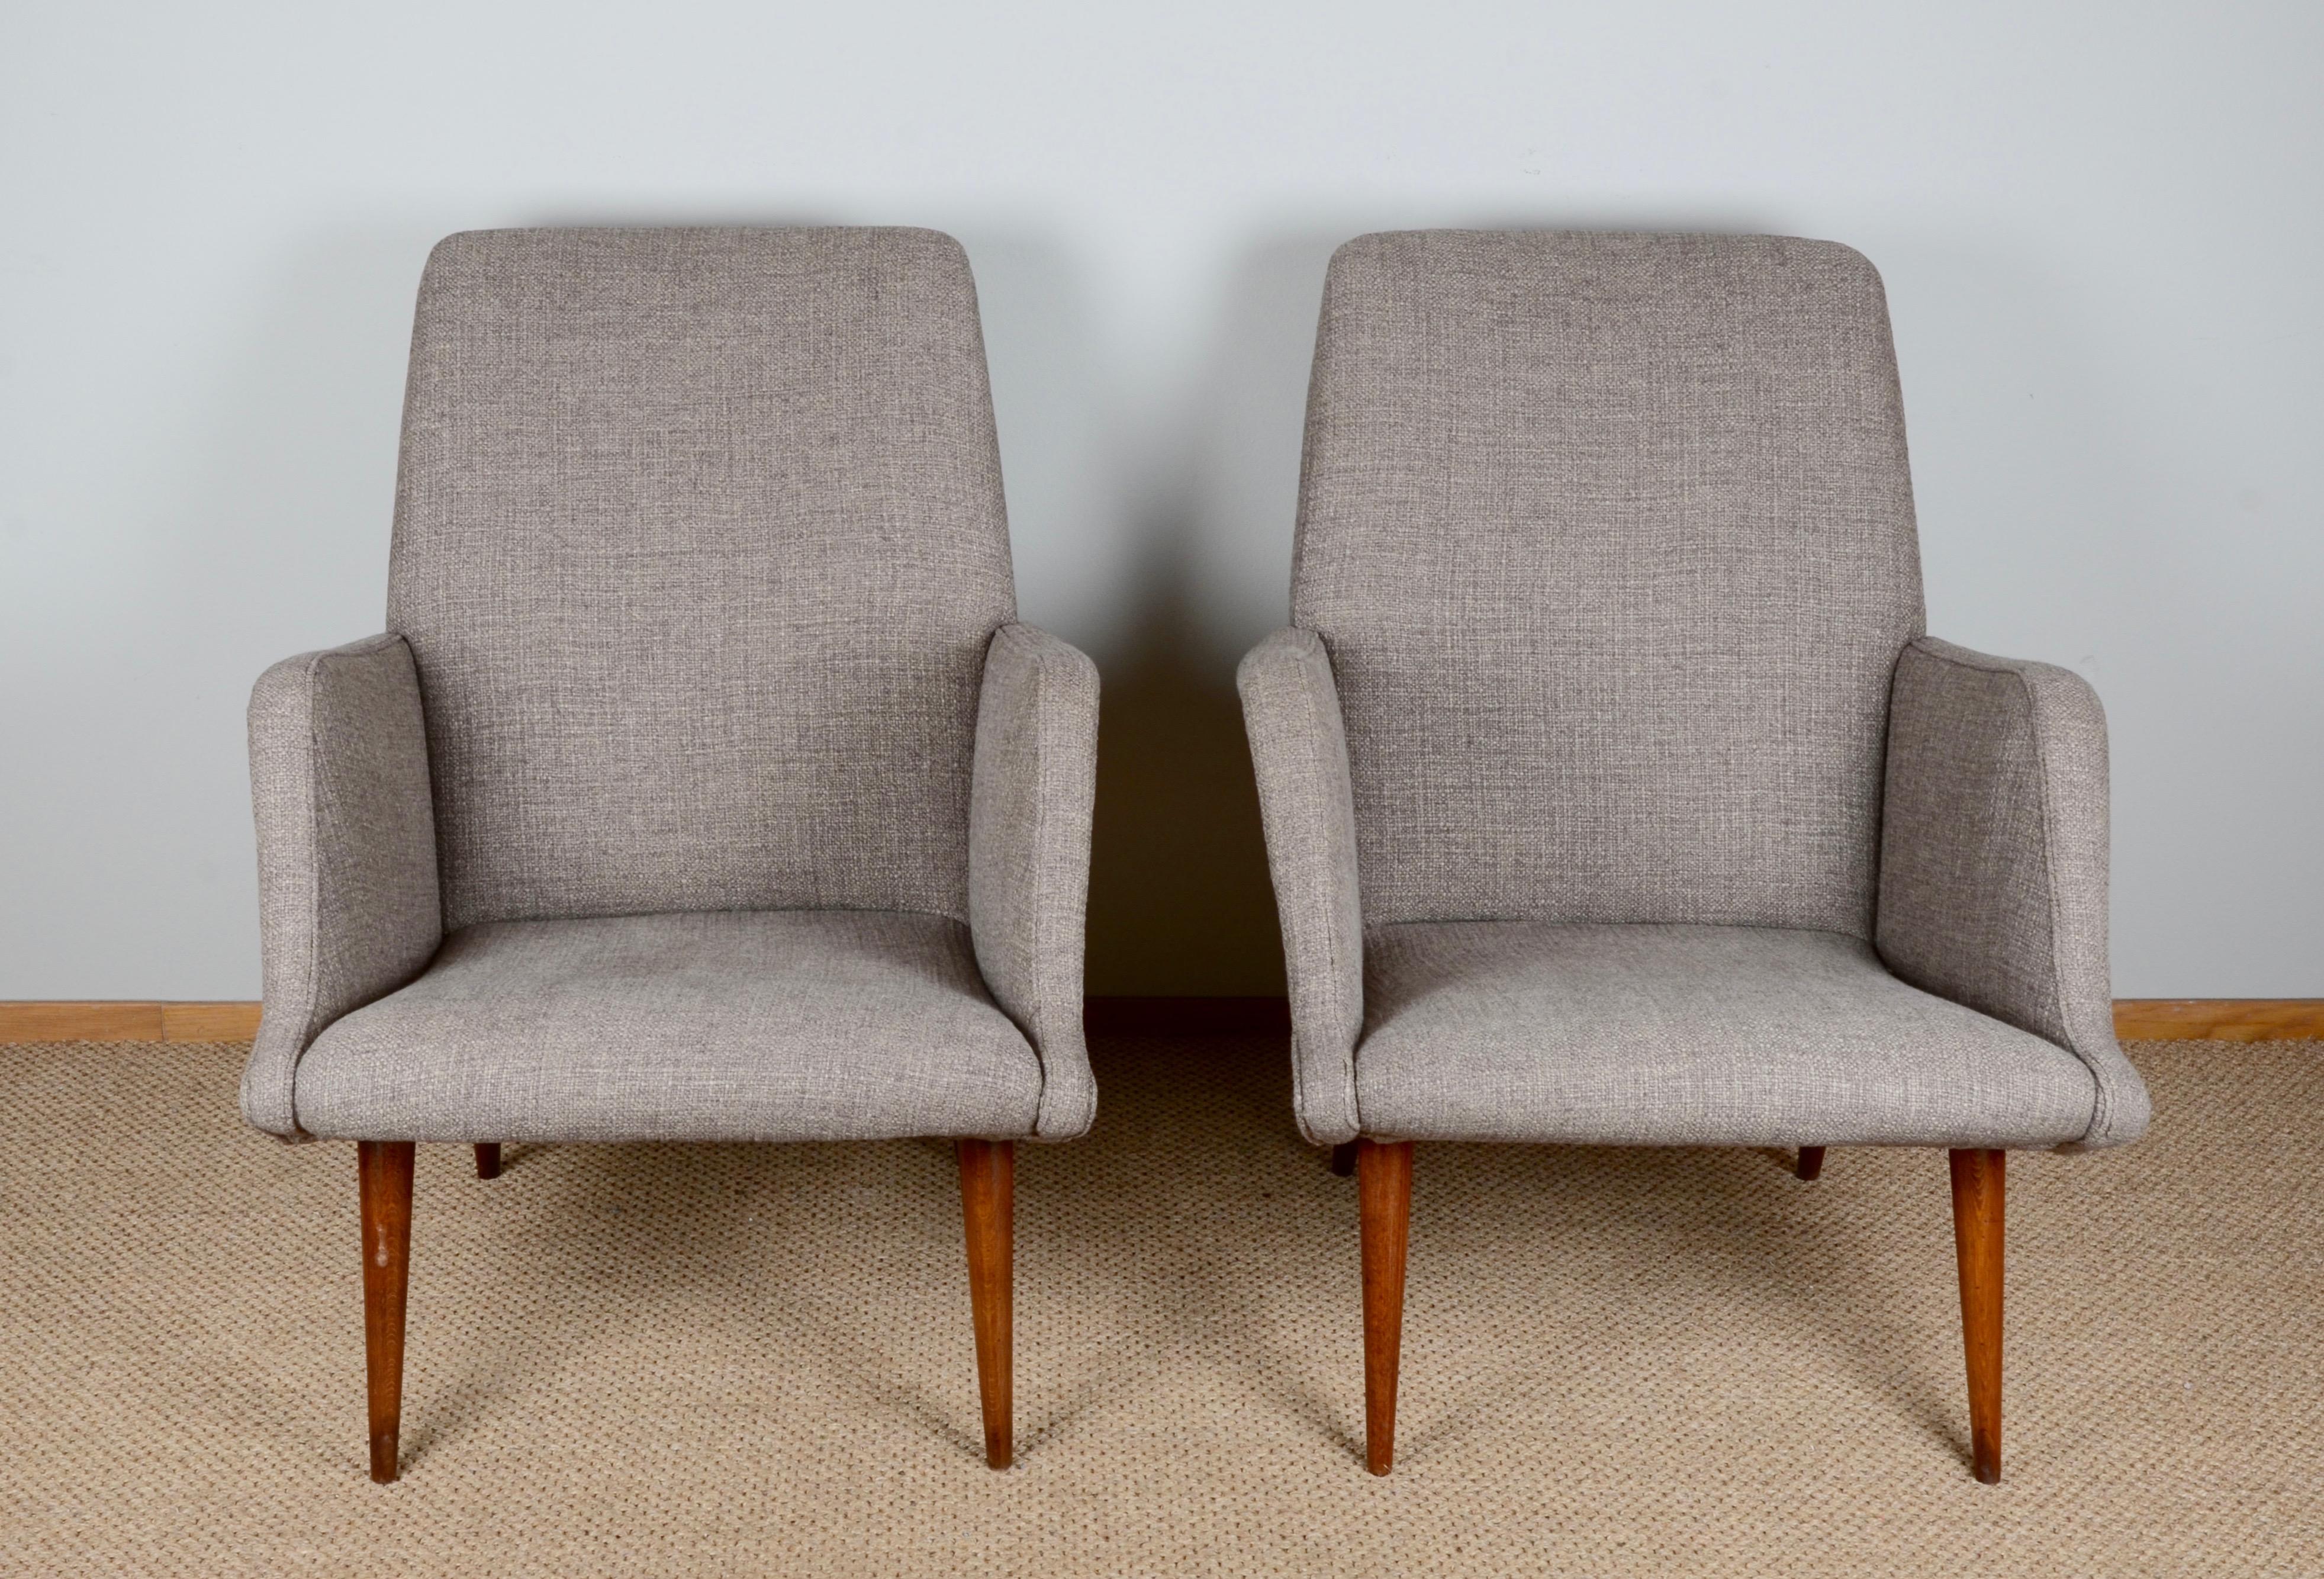 A pair of easy chairs, designed by Carlo De Carli. Italy, mid-1900s.

 

Marked: Figli di Amedeo Cassina. Meda (Milano) Tel. 7238.

